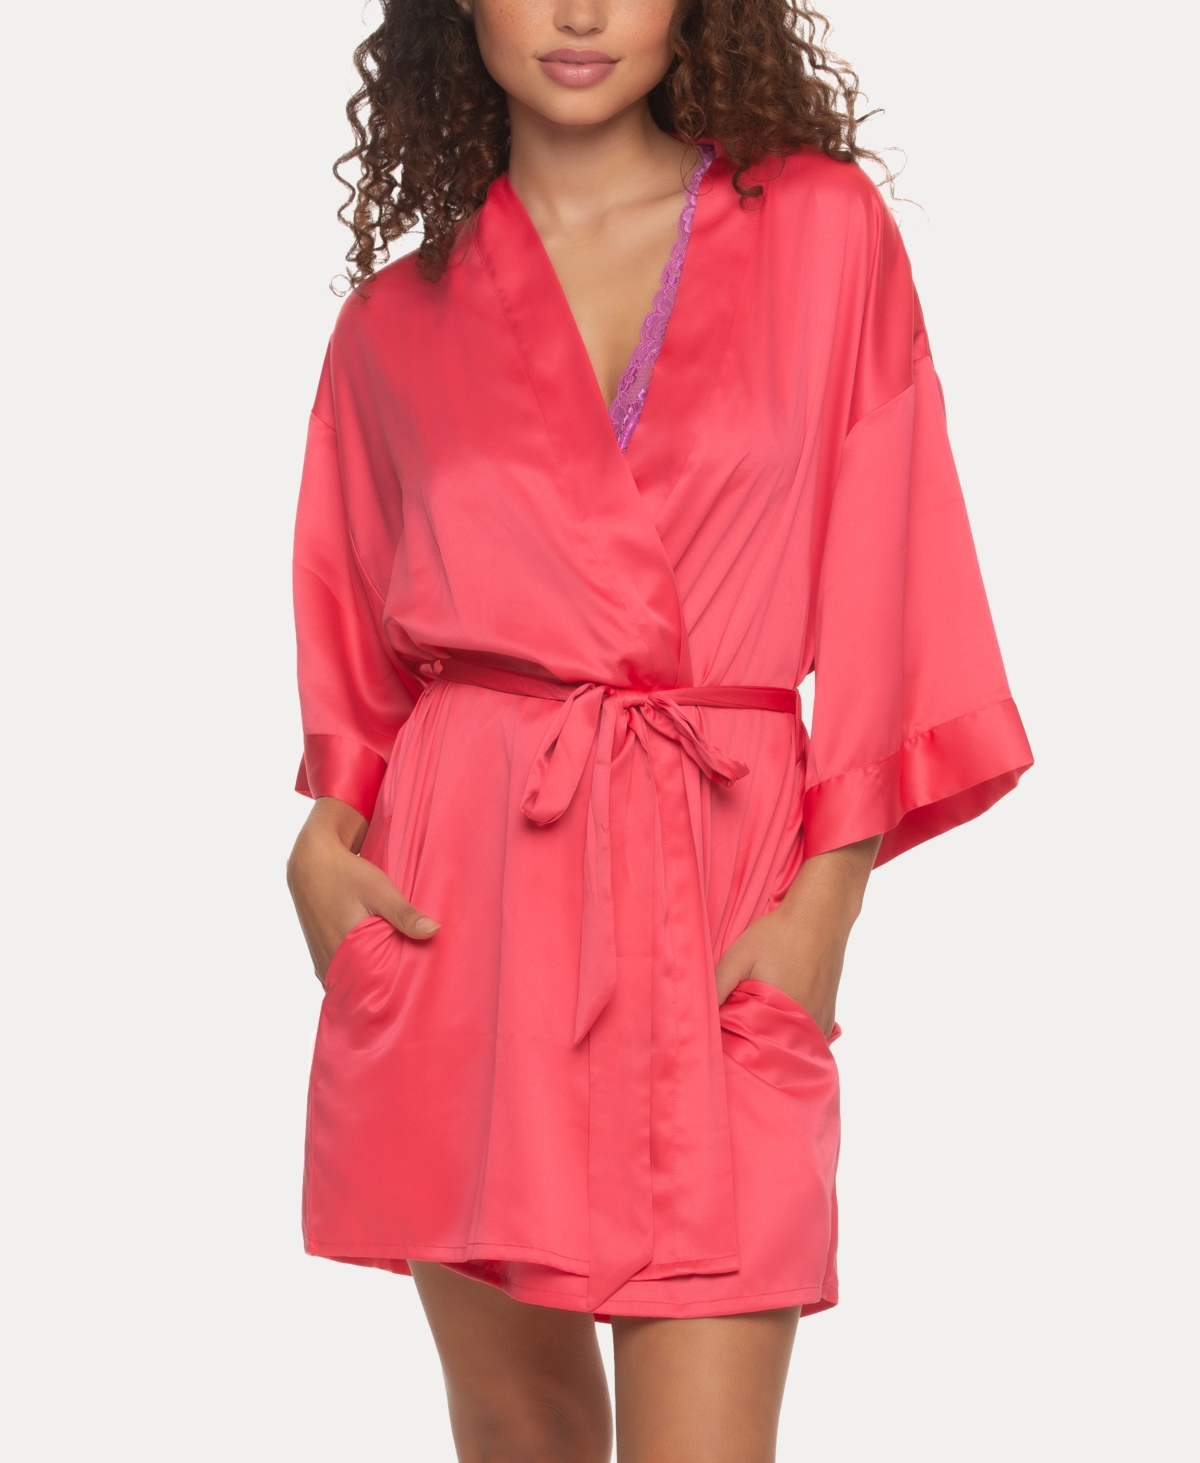 Jezebel Women's Muse Satin Lingerie Kimono Robe